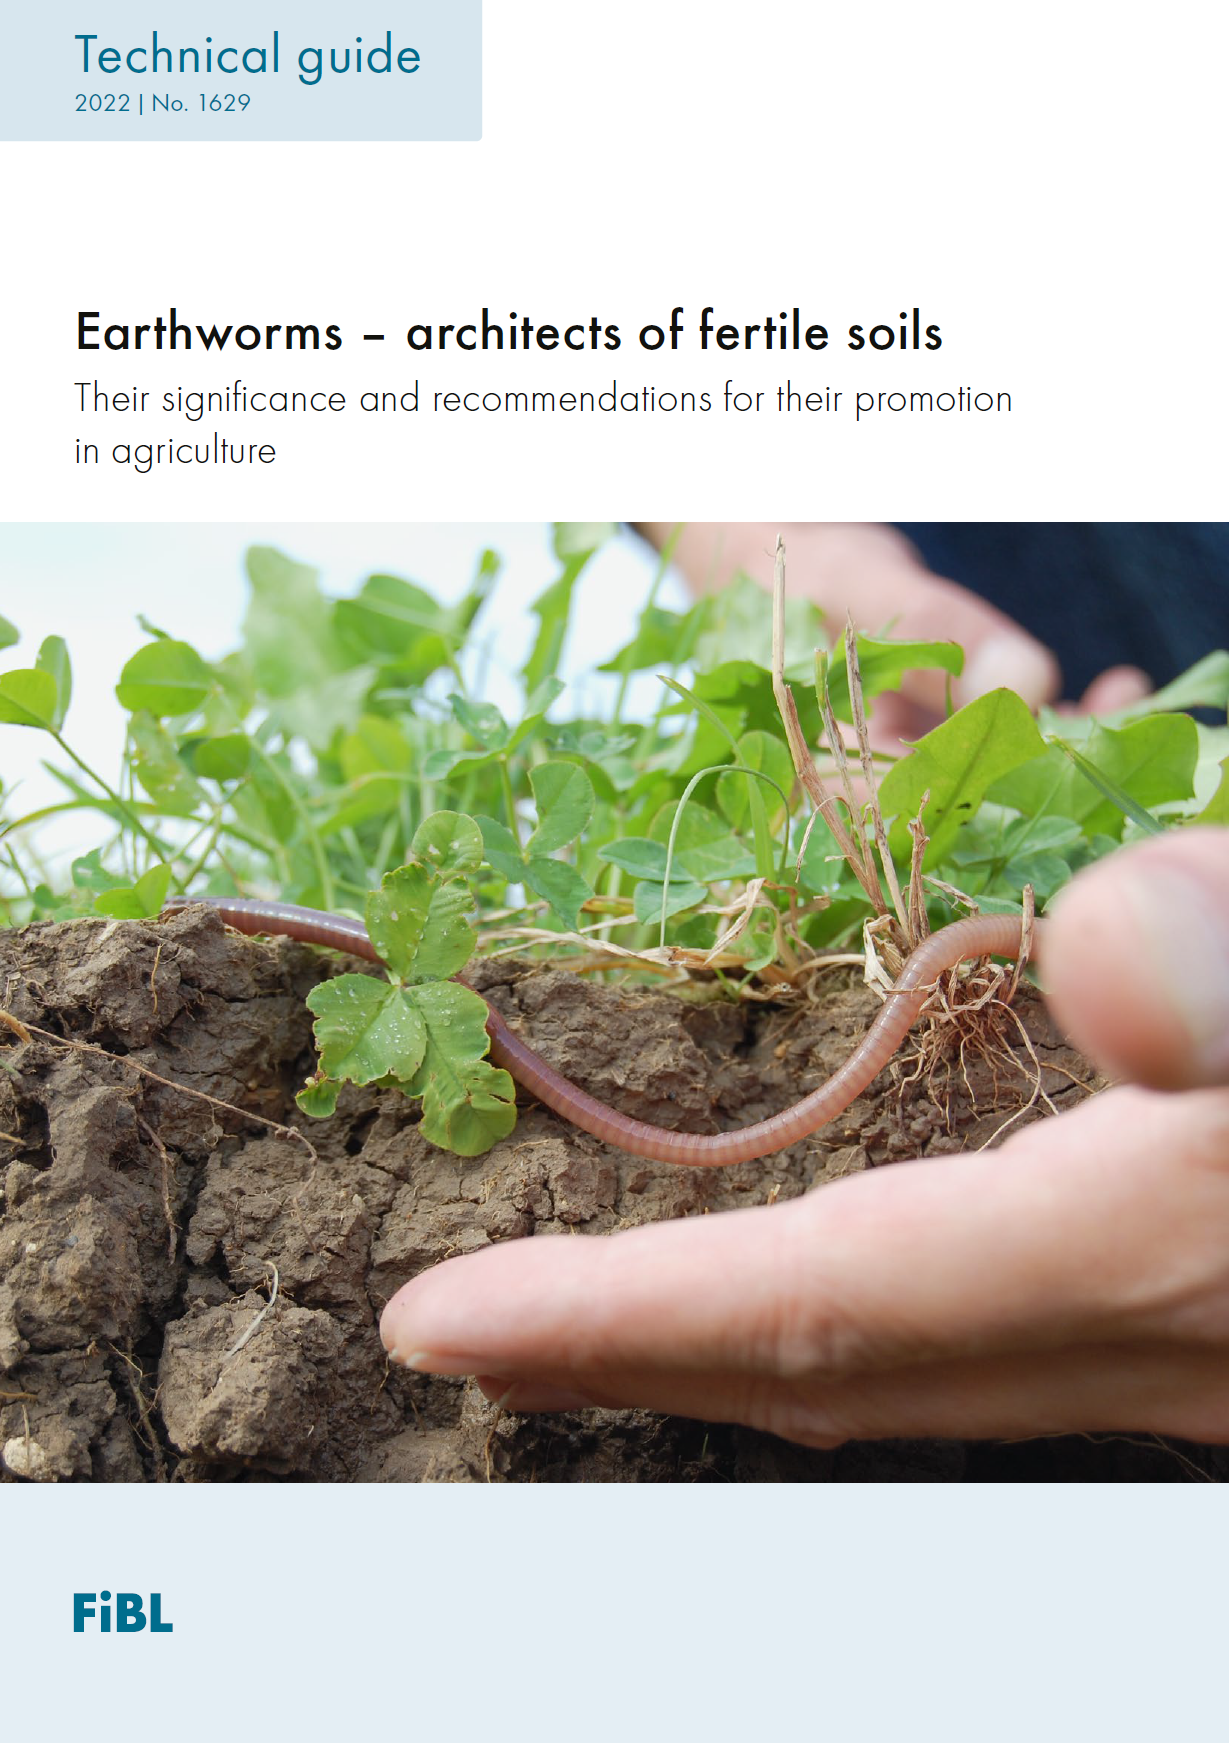 Earthworms: architects of fertile soils (FiBL Technical Guide)